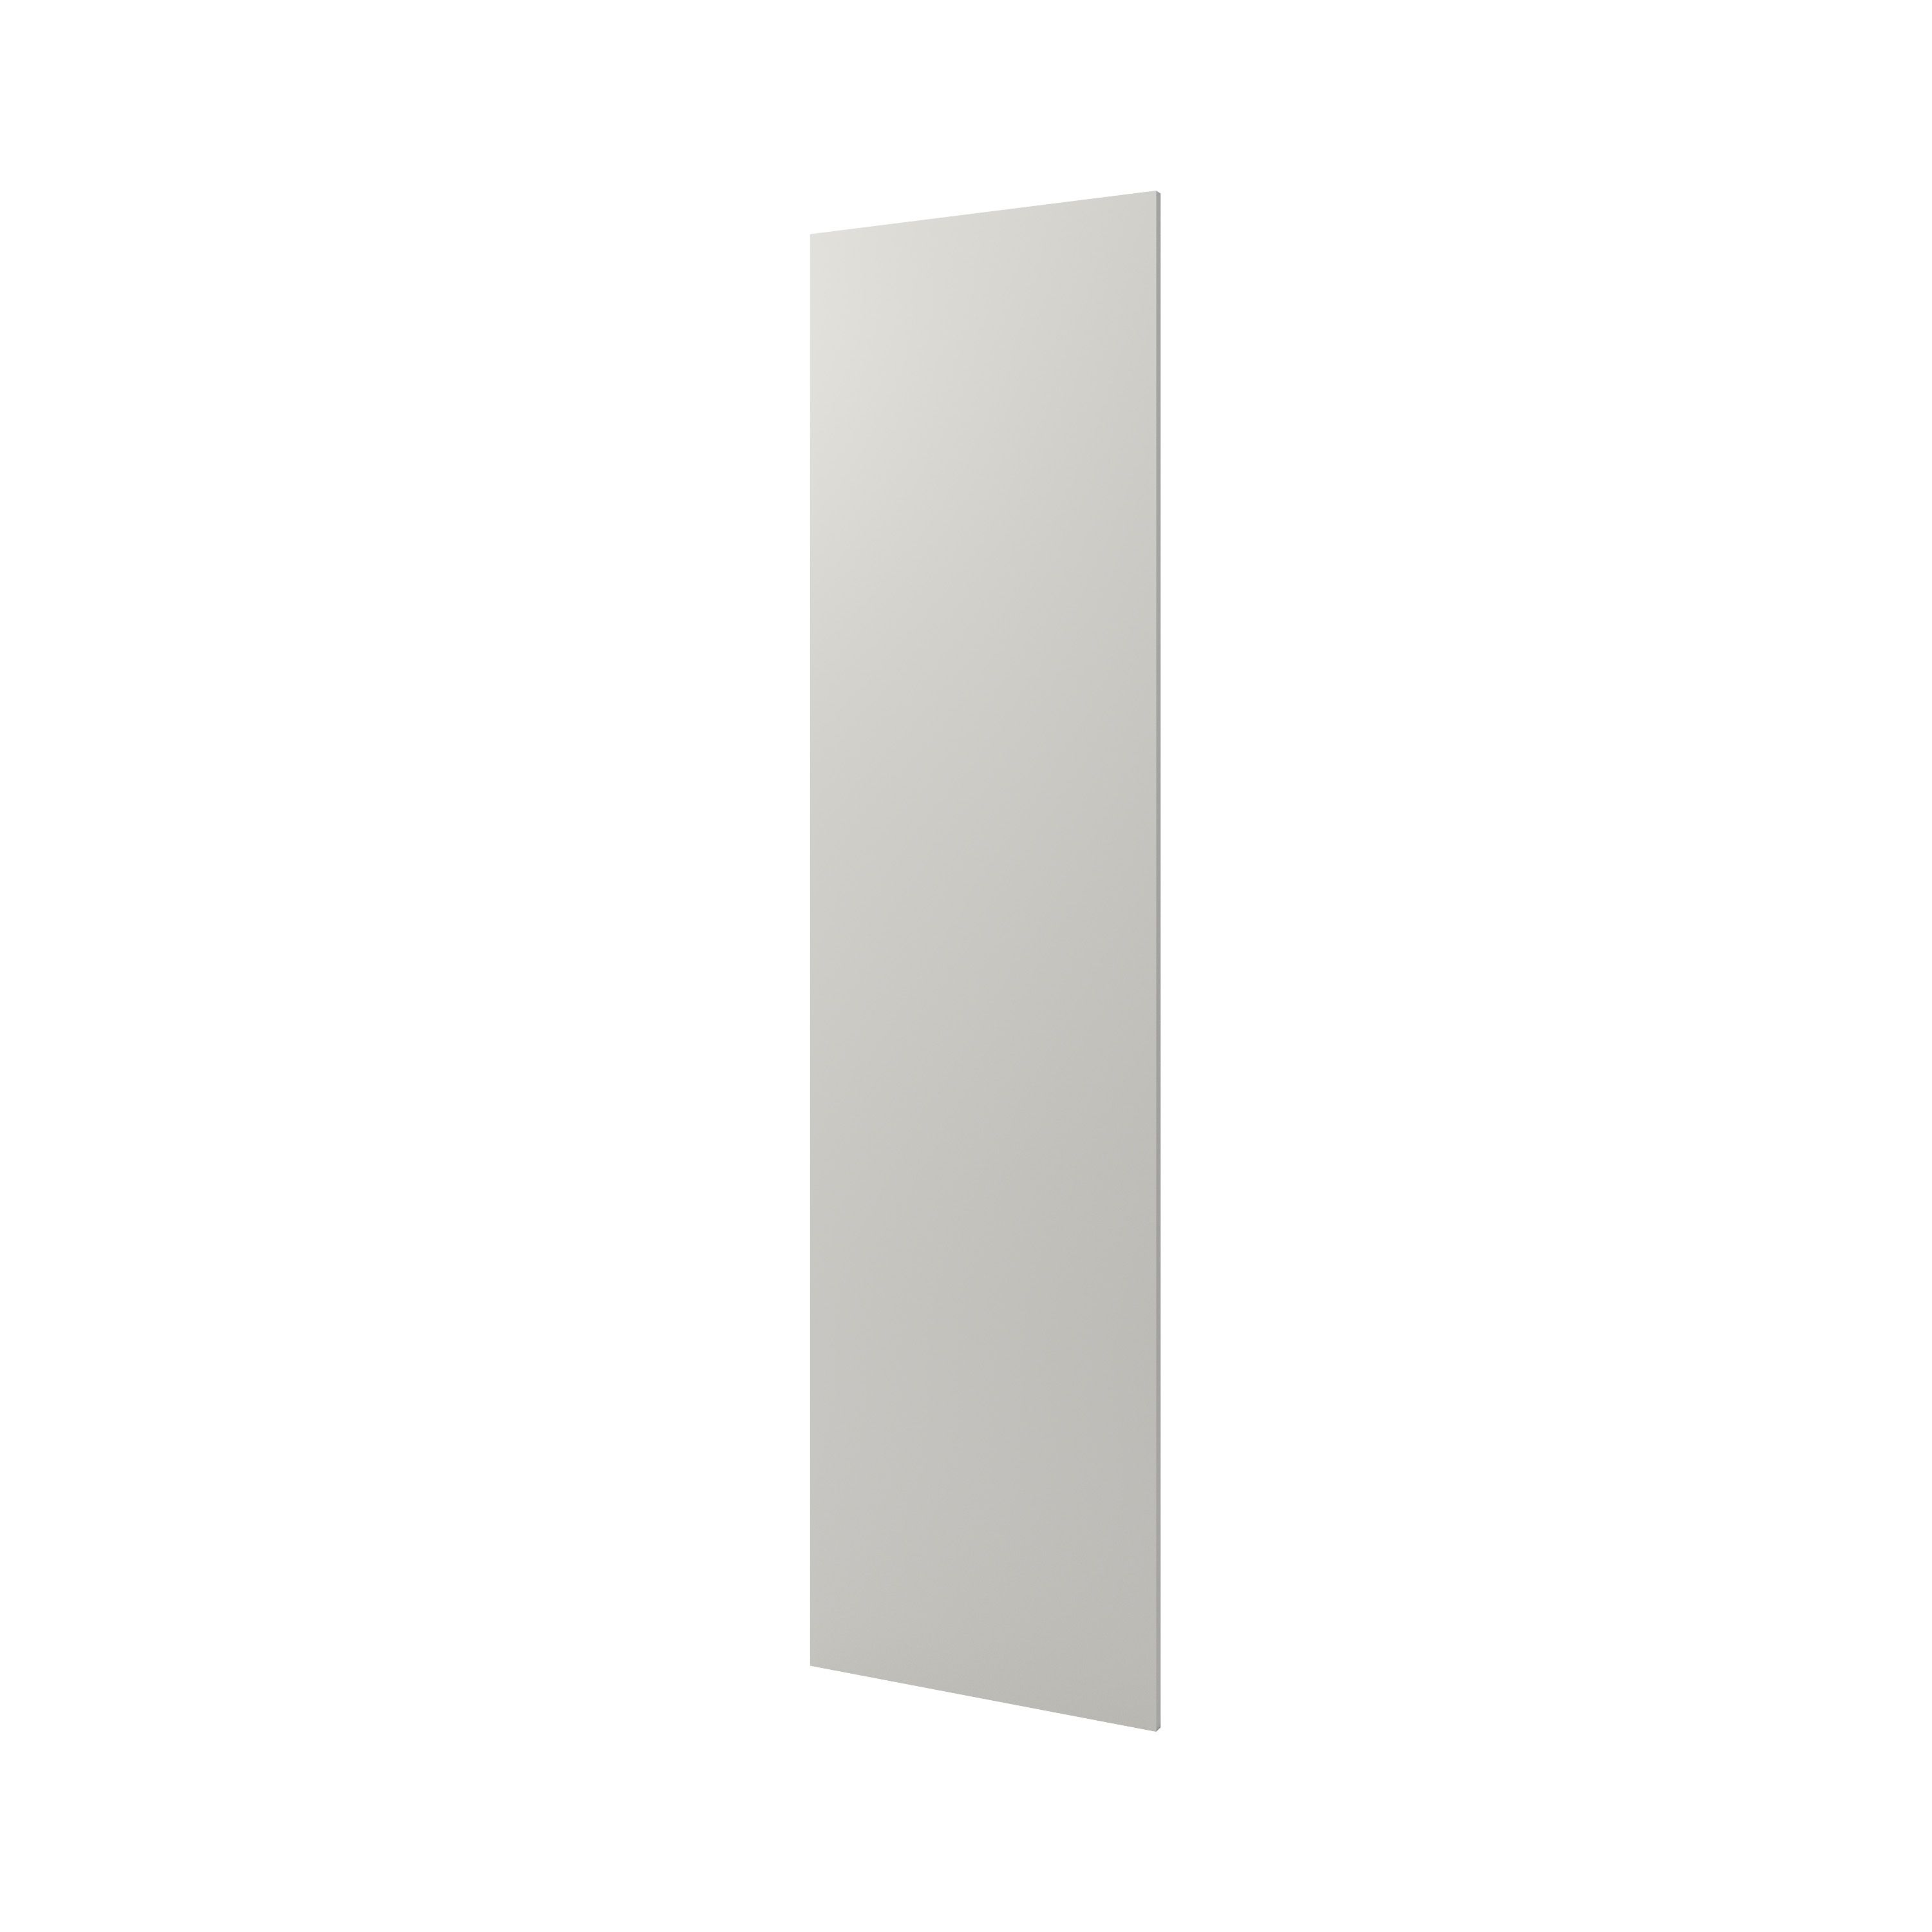 GoodHome Stevia Matt Pewter grey slab Tall End panel (H)2190mm (W)570mm, Pair